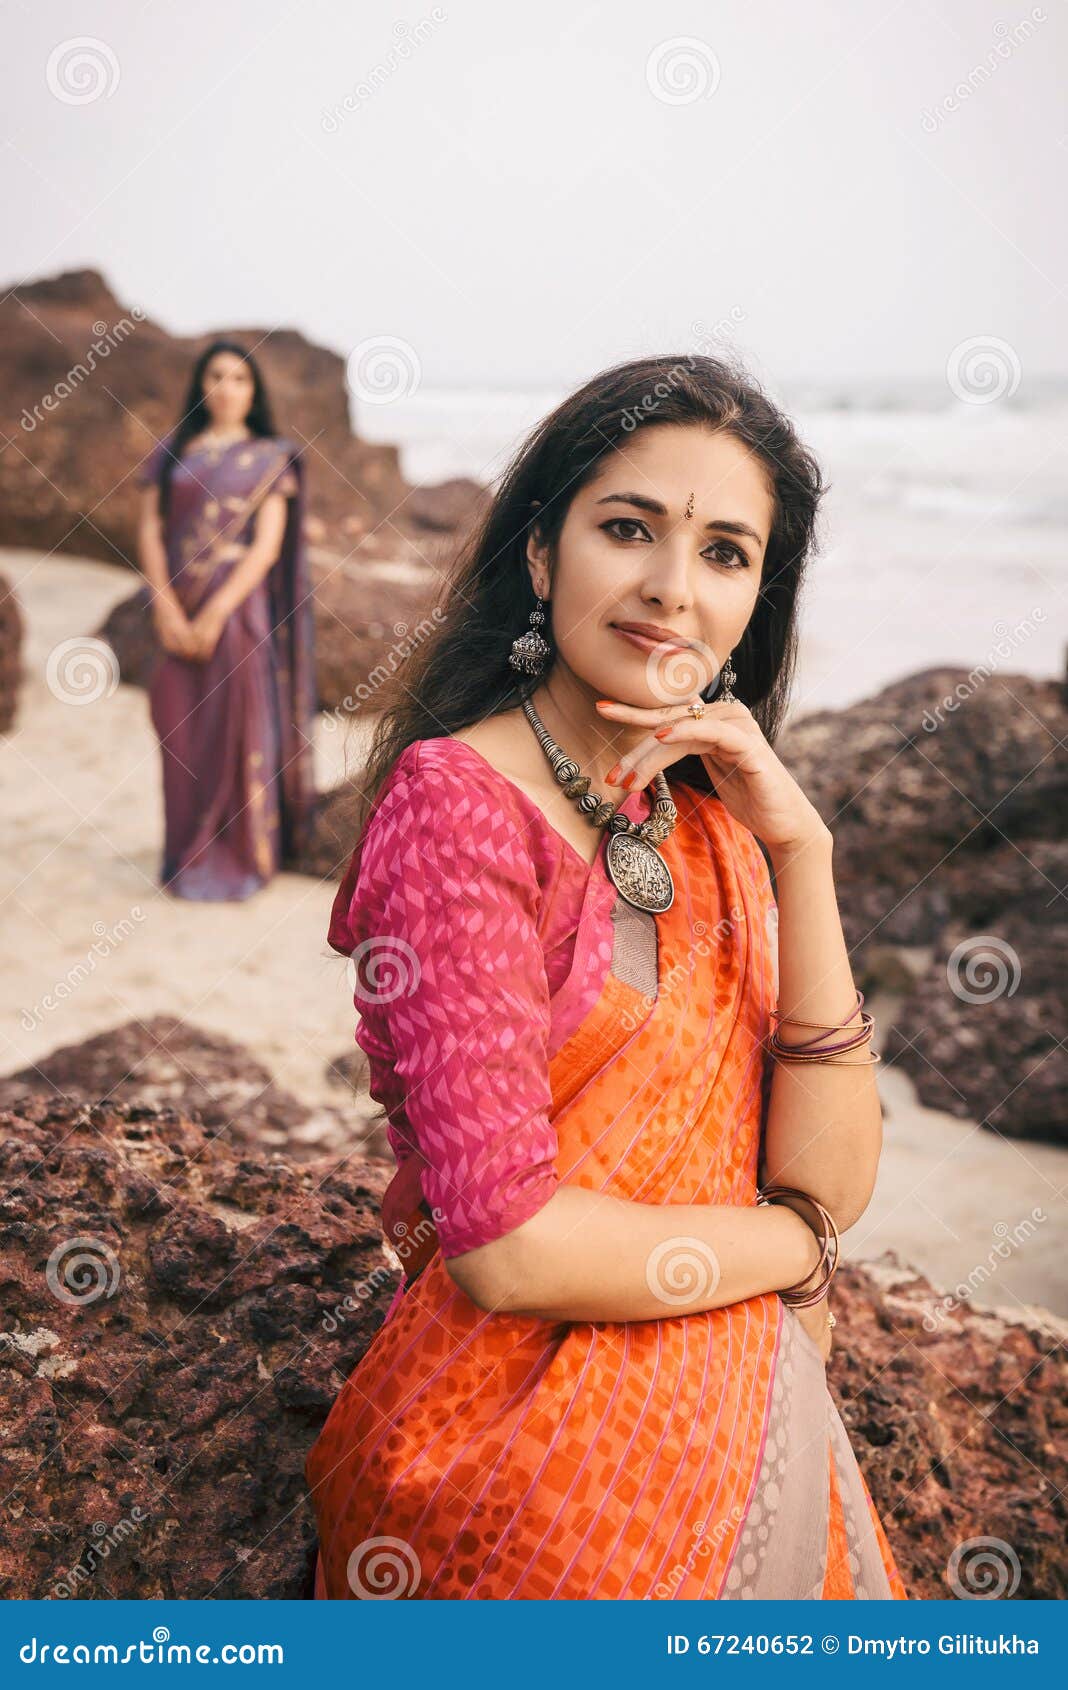 https://thumbs.dreamstime.com/z/indian-woman-beautiful-saree-fashion-shoot-women-traditional-clothes-standing-rock-near-beach-67240652.jpg